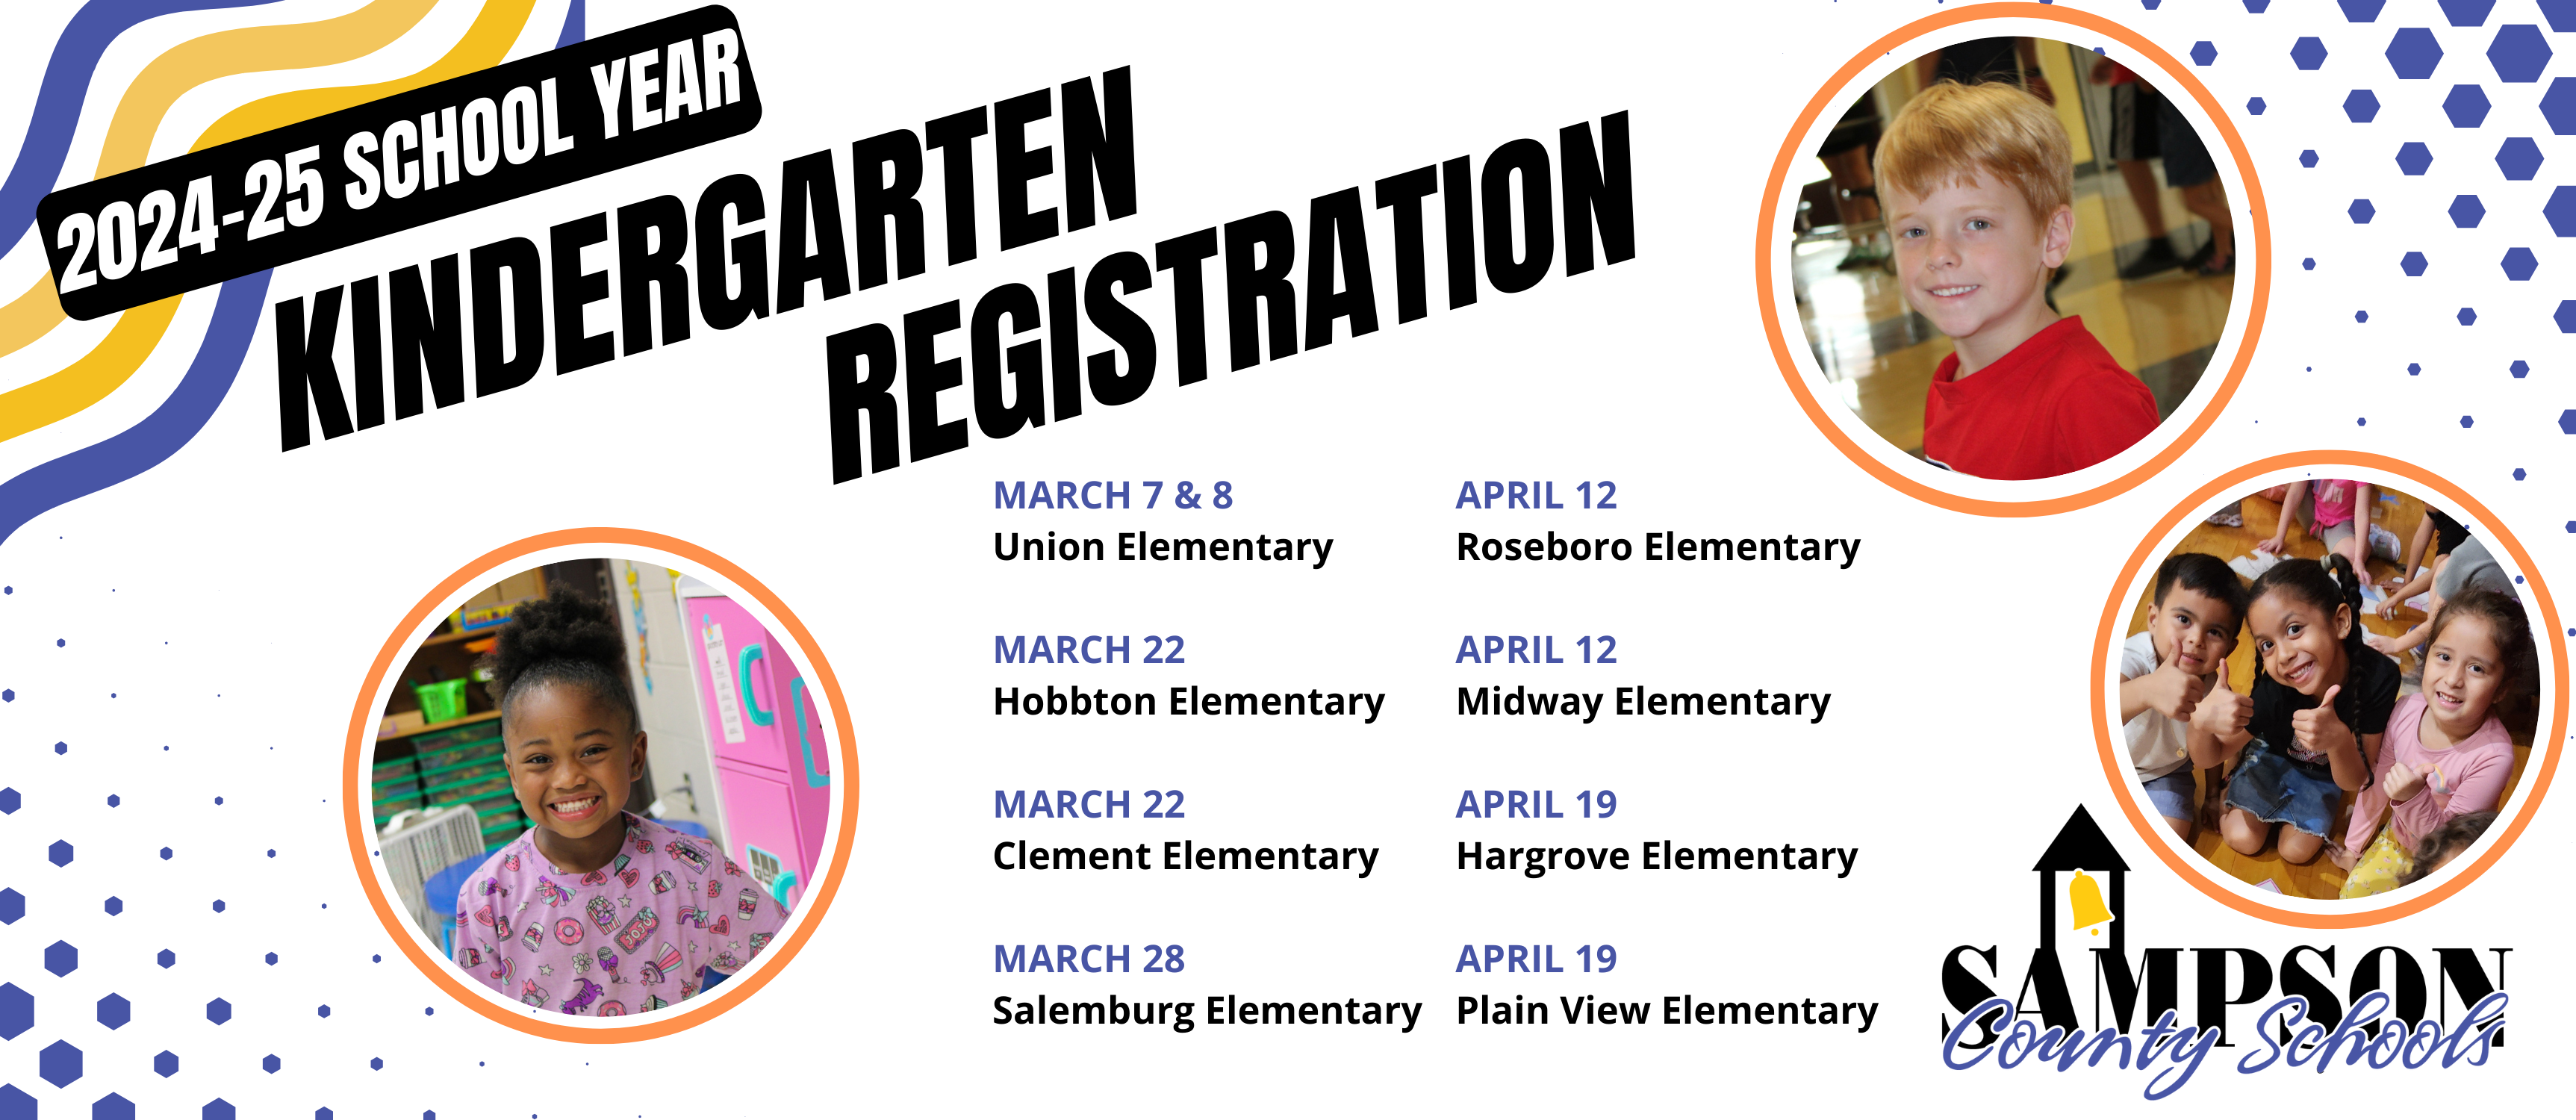 kindergarten registration dates